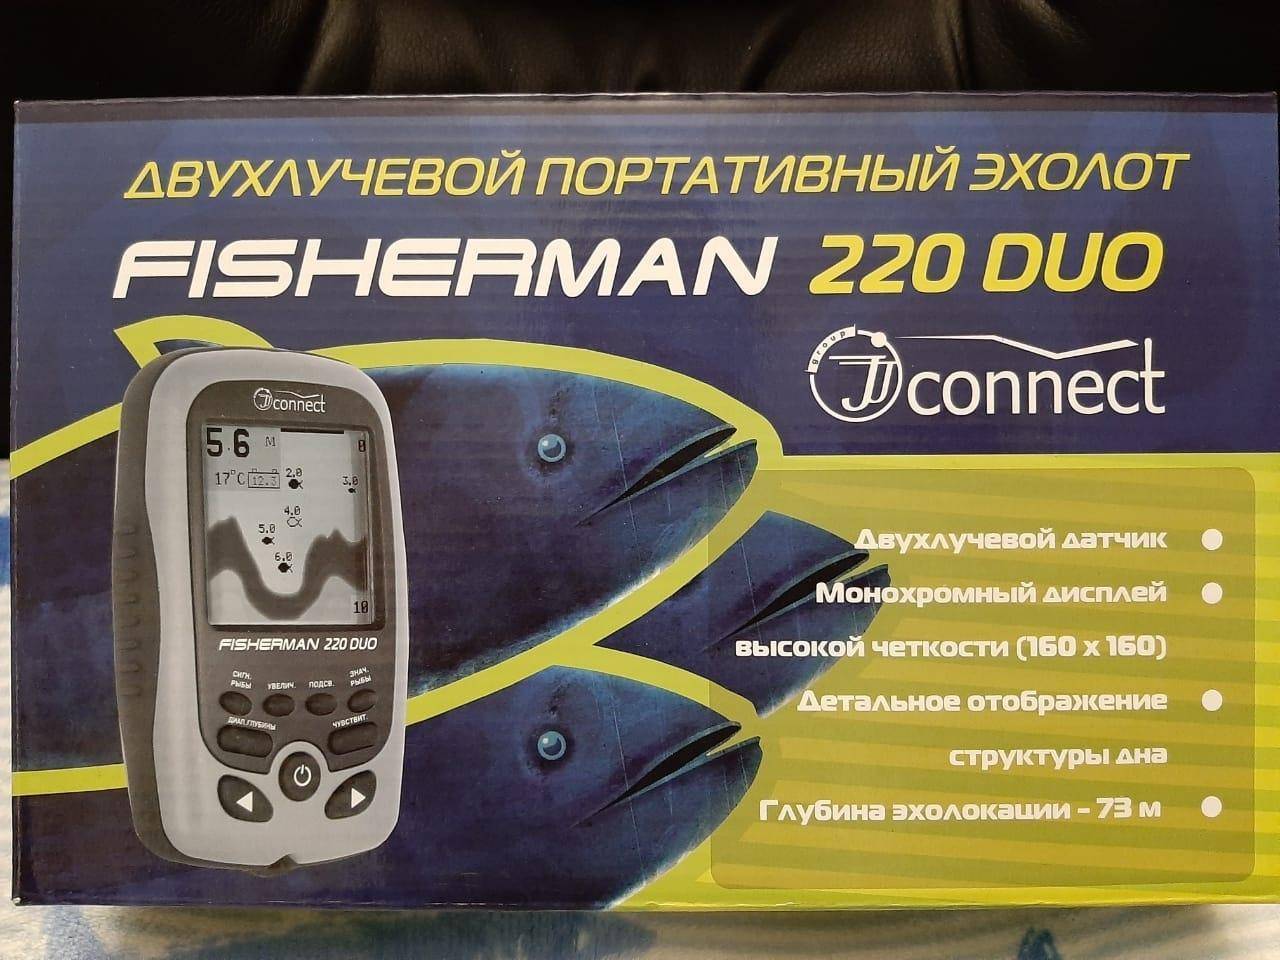 ᐉ эхолот jj-connect fisherman 220 duo ice edition - обзор и отзывы - fish54.ru